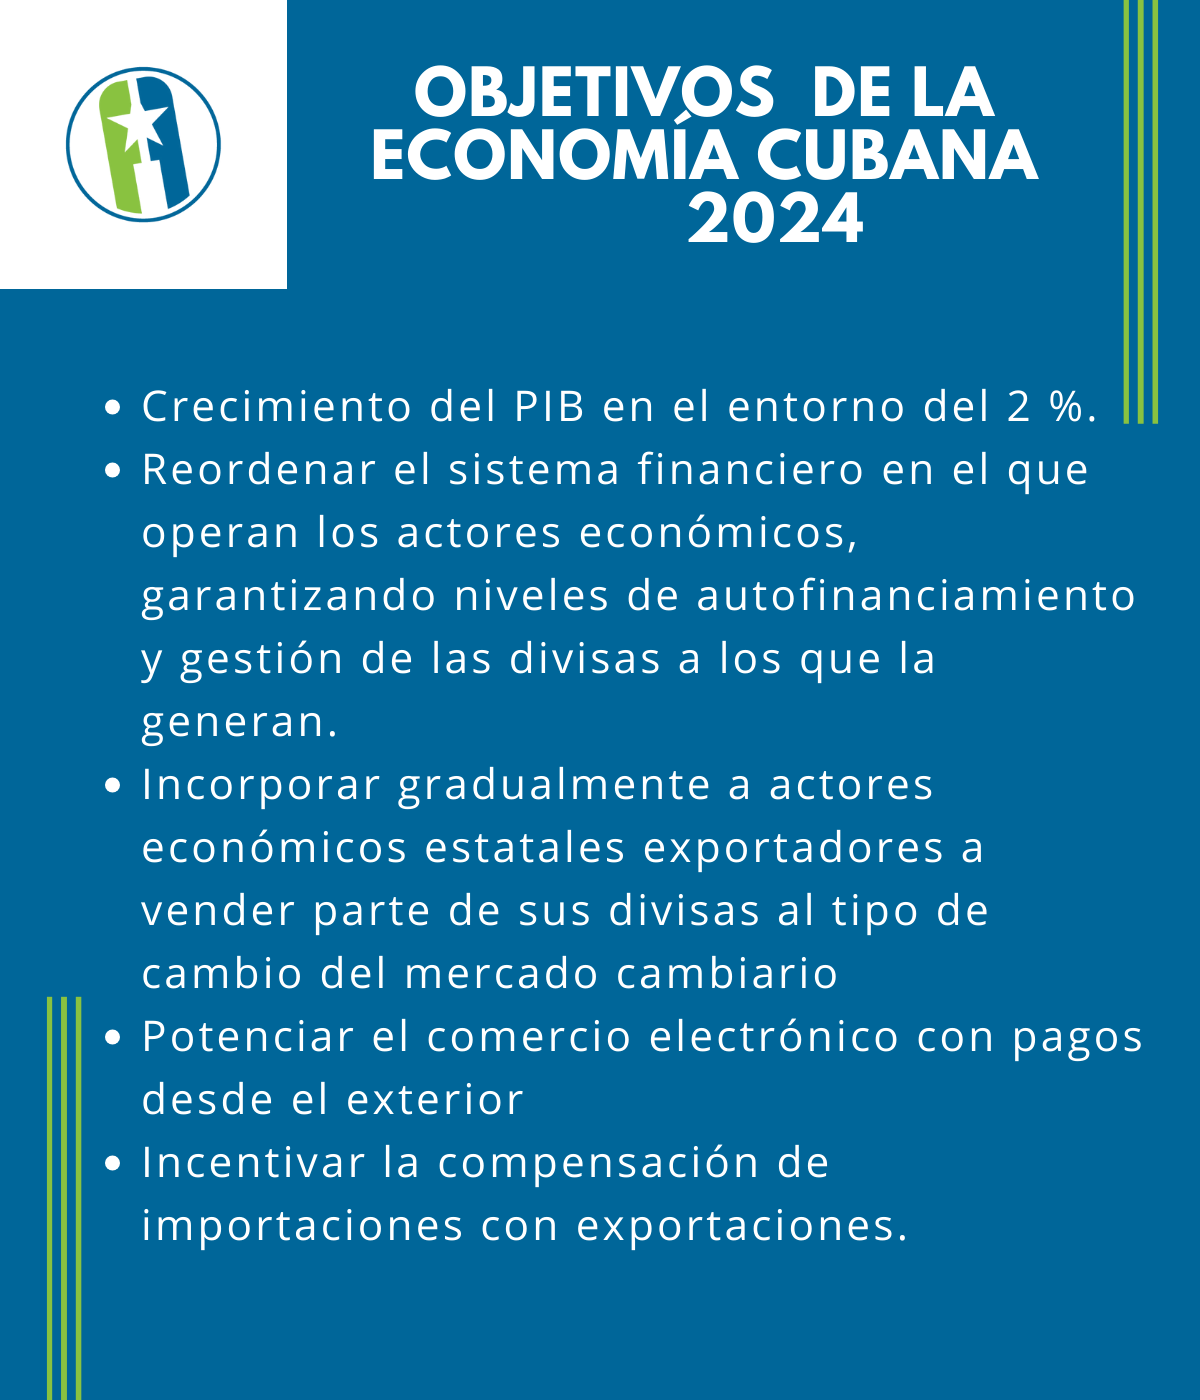 Objetivos de la economia cubana para 2024